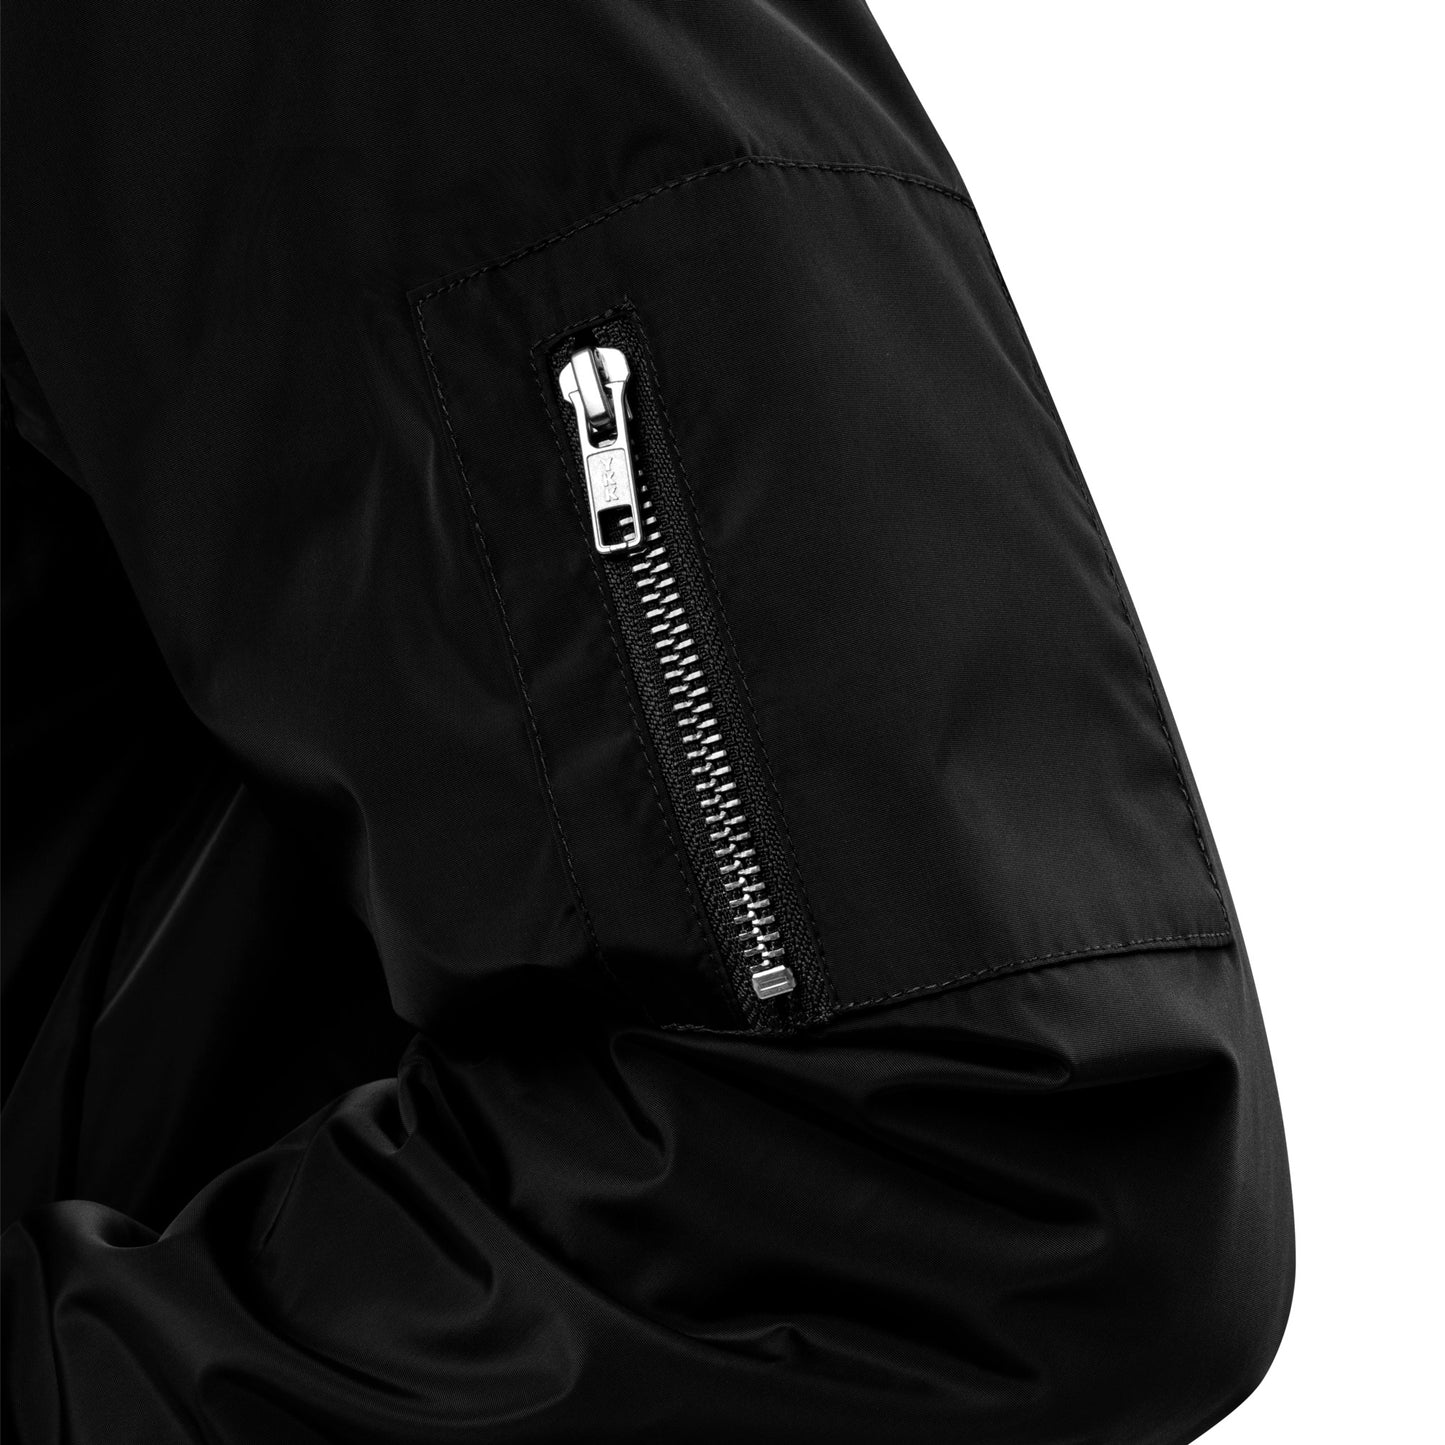 TRIFECTA Premium Bomber Jacket